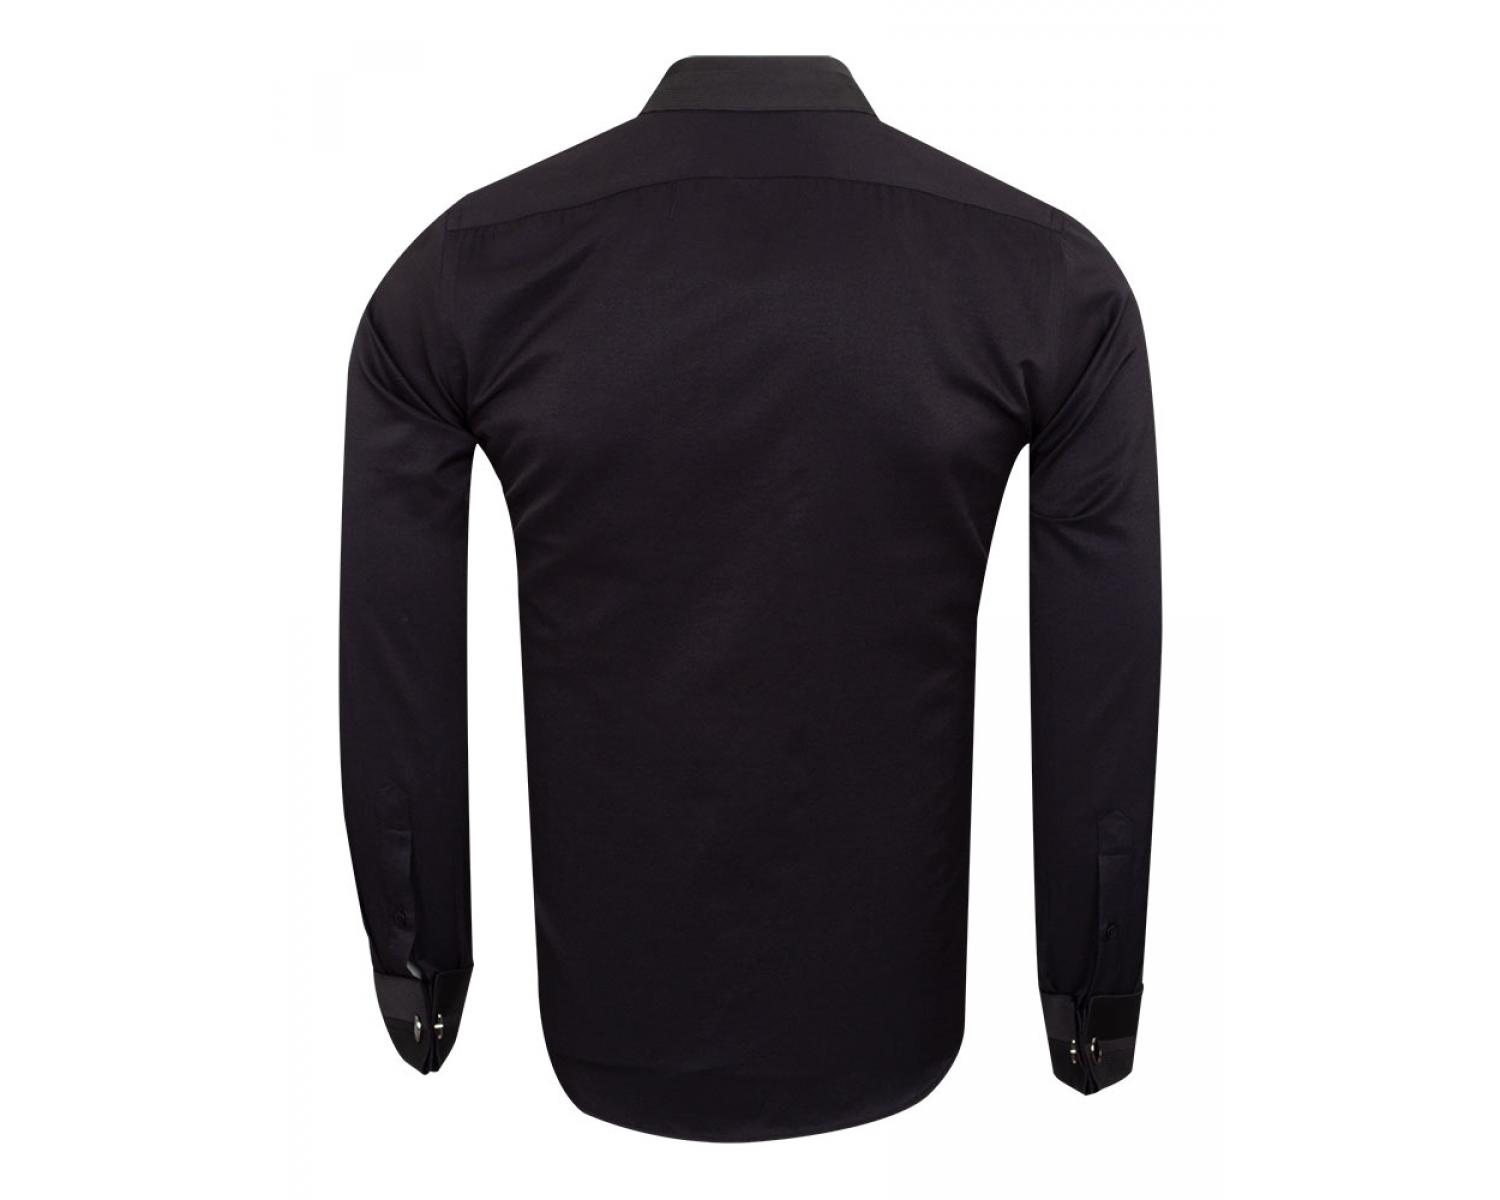 SL 6745 Men's black double cuff shirt with ornament print details &  cufflinks - Quality Designed Shirts